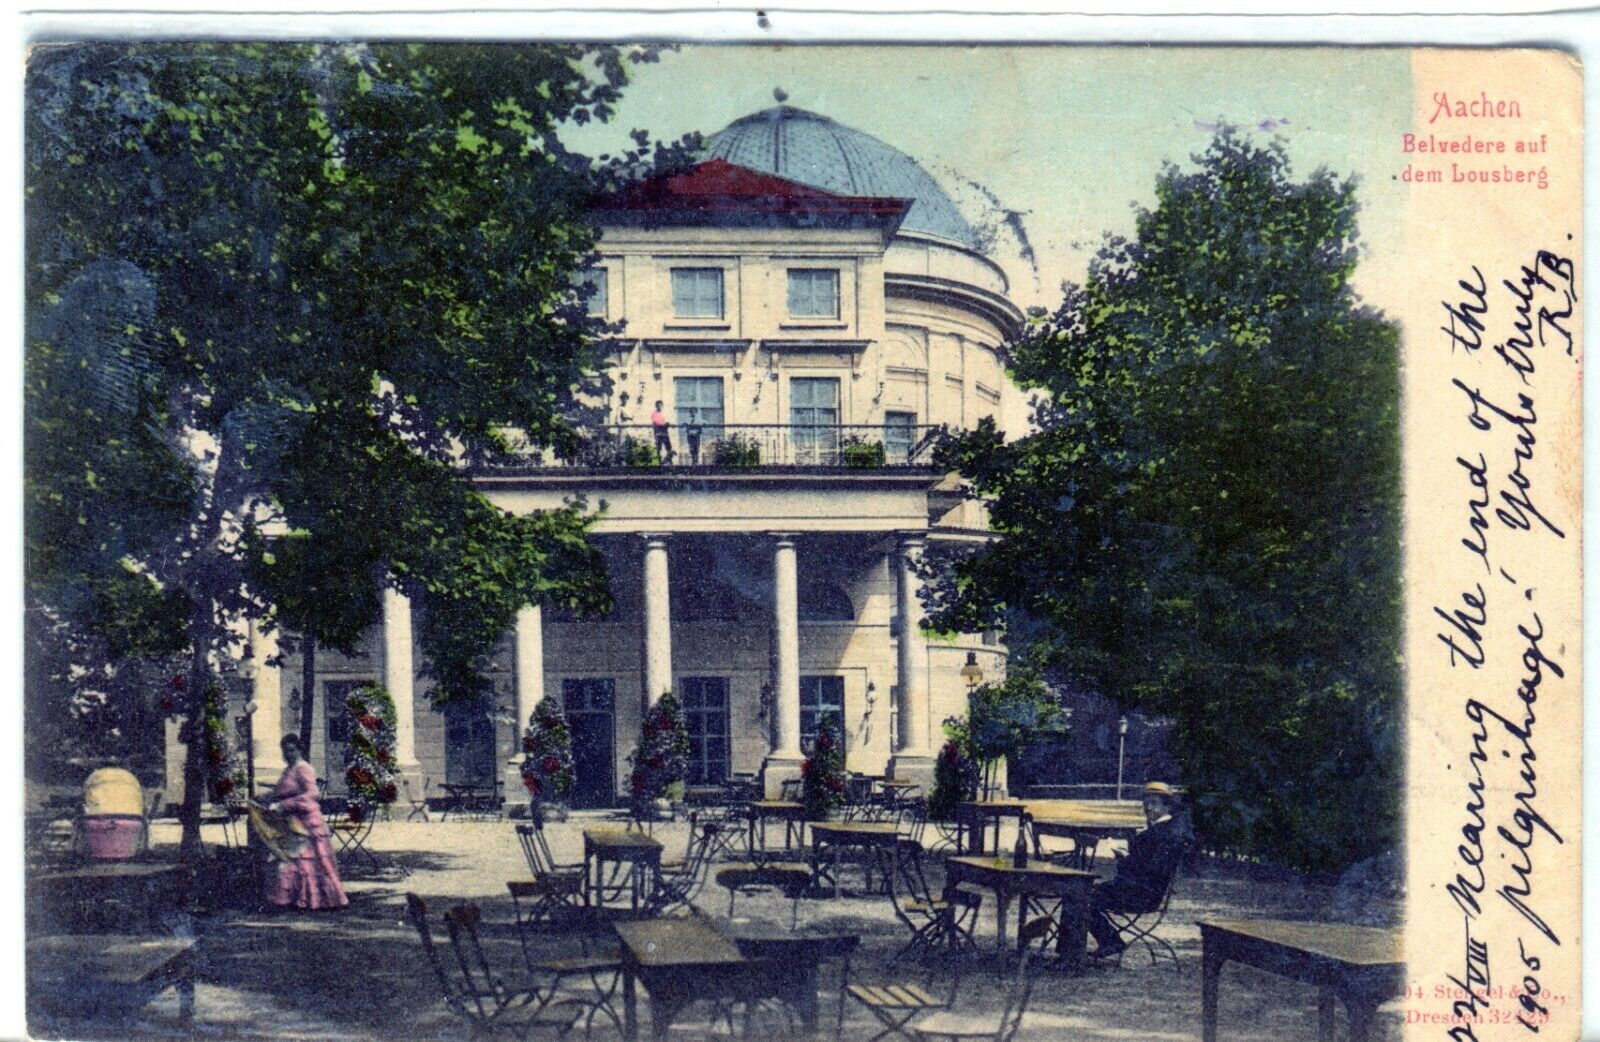 Germany AK Aachen Aachen 52070 - Belvedere auf dem Lousberg 1905 cover postcard